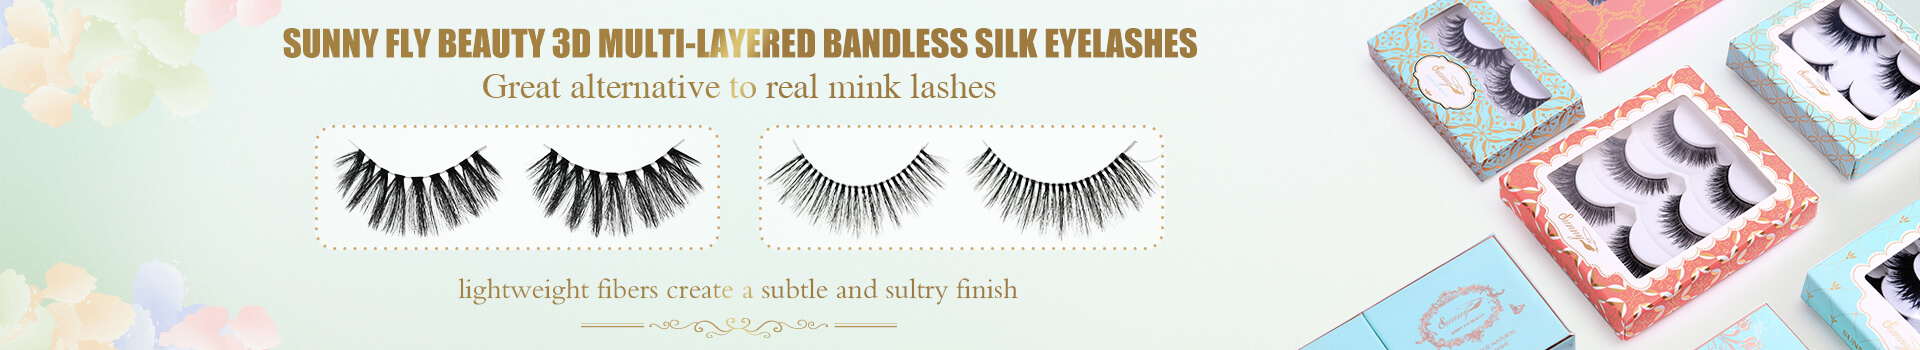 3D Multi-Layered Bandless Silk Eyelas TA01